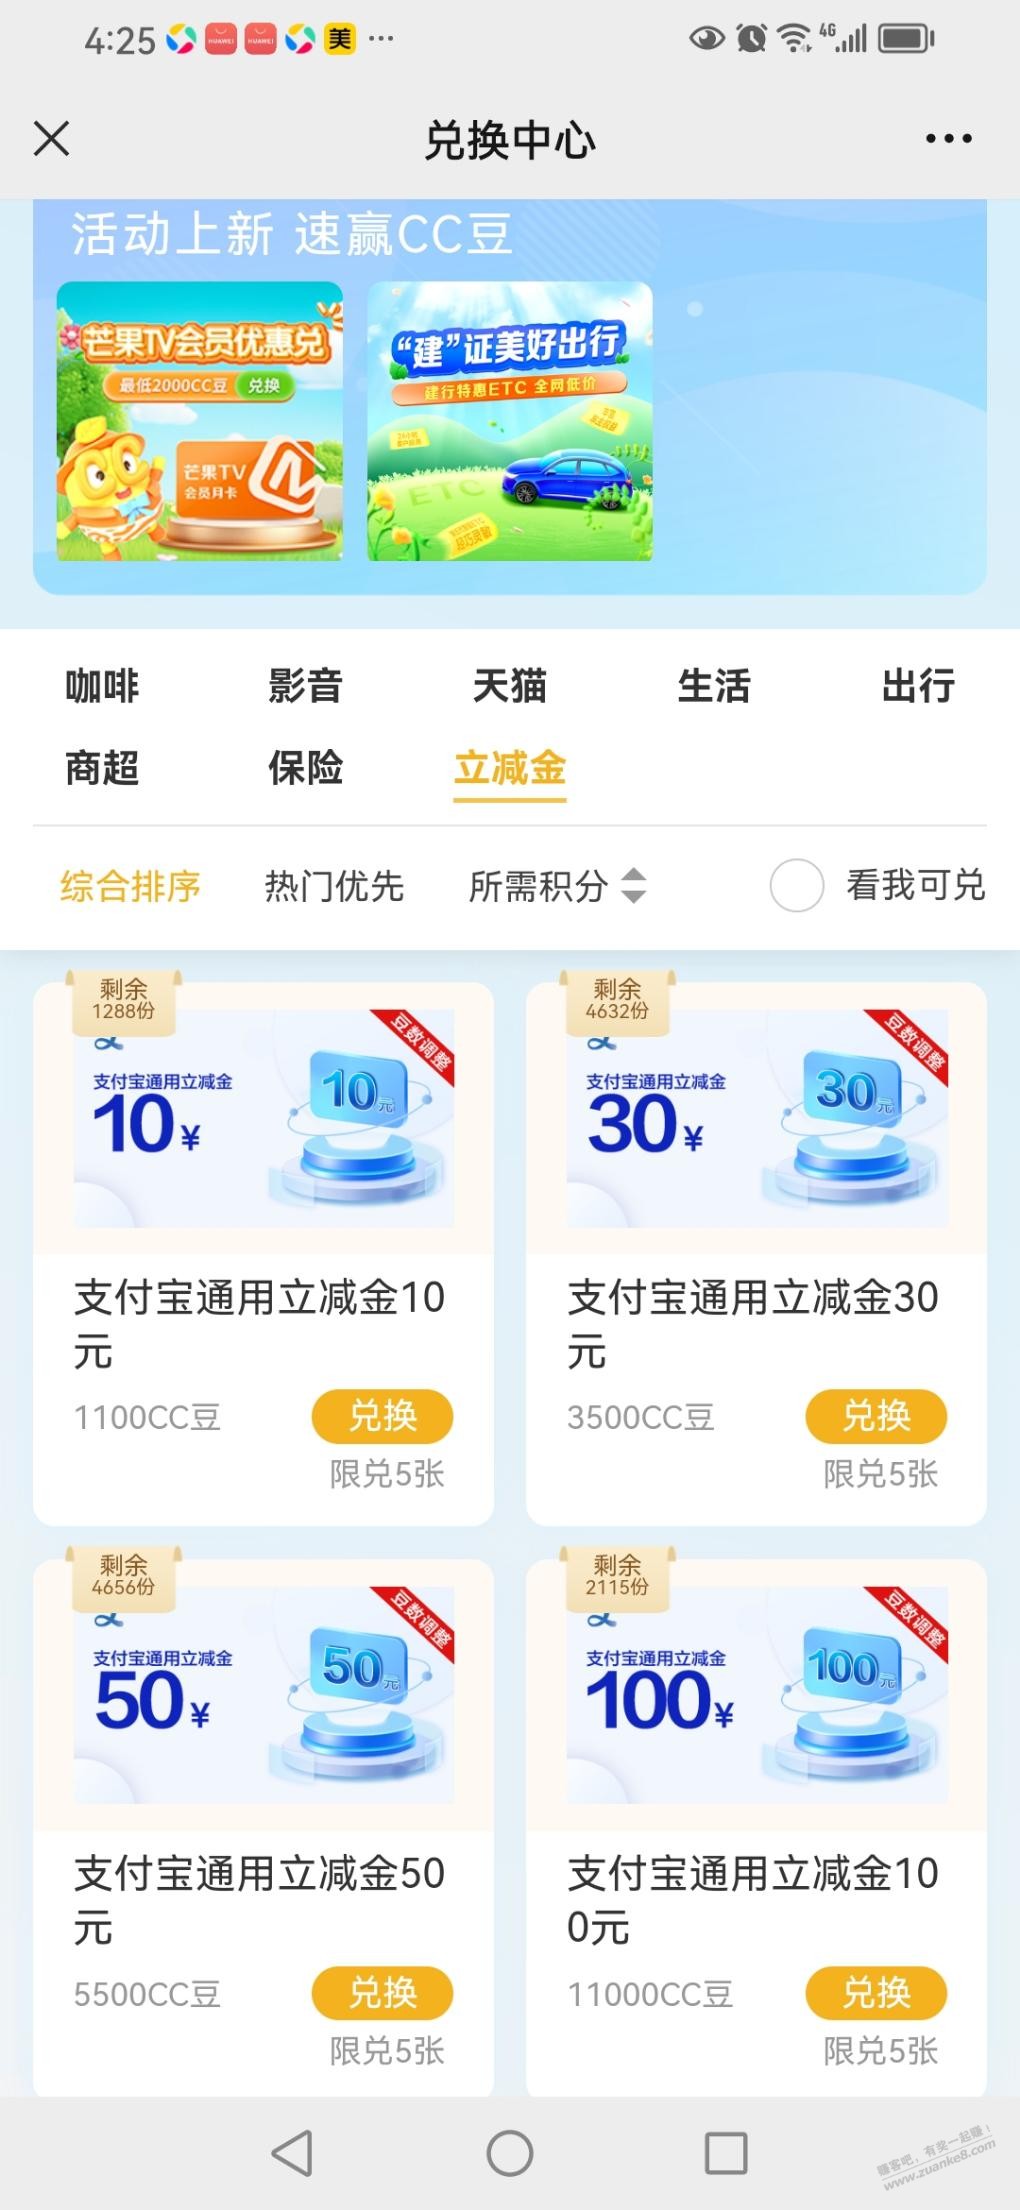 CC豆上立减金了-惠小助(52huixz.com)